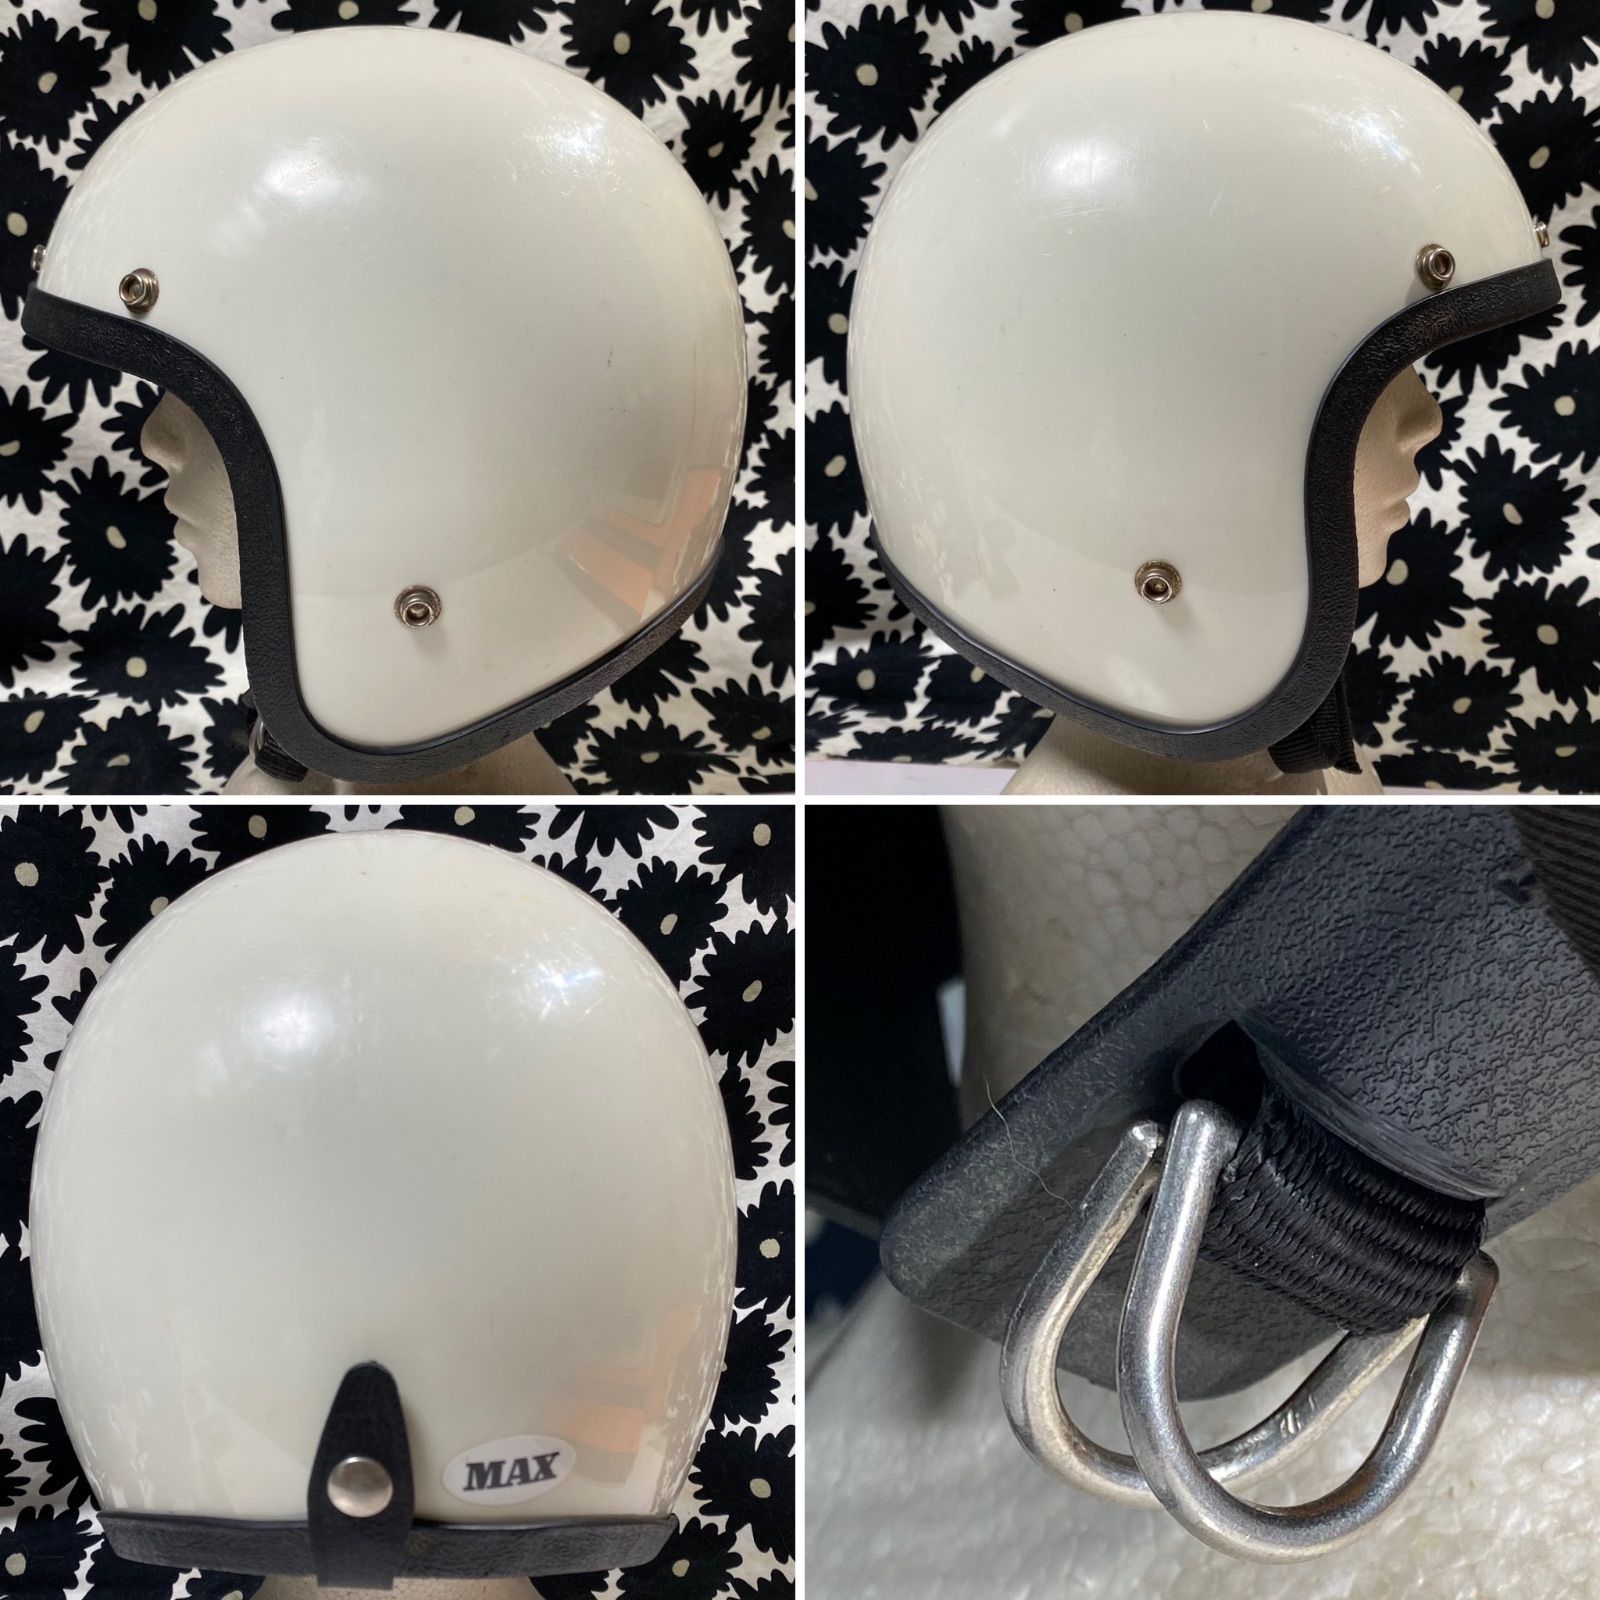 MAX 70's ジェットヘルメット リペア/目深加工済 Mシェル 約59cm〜61cm 